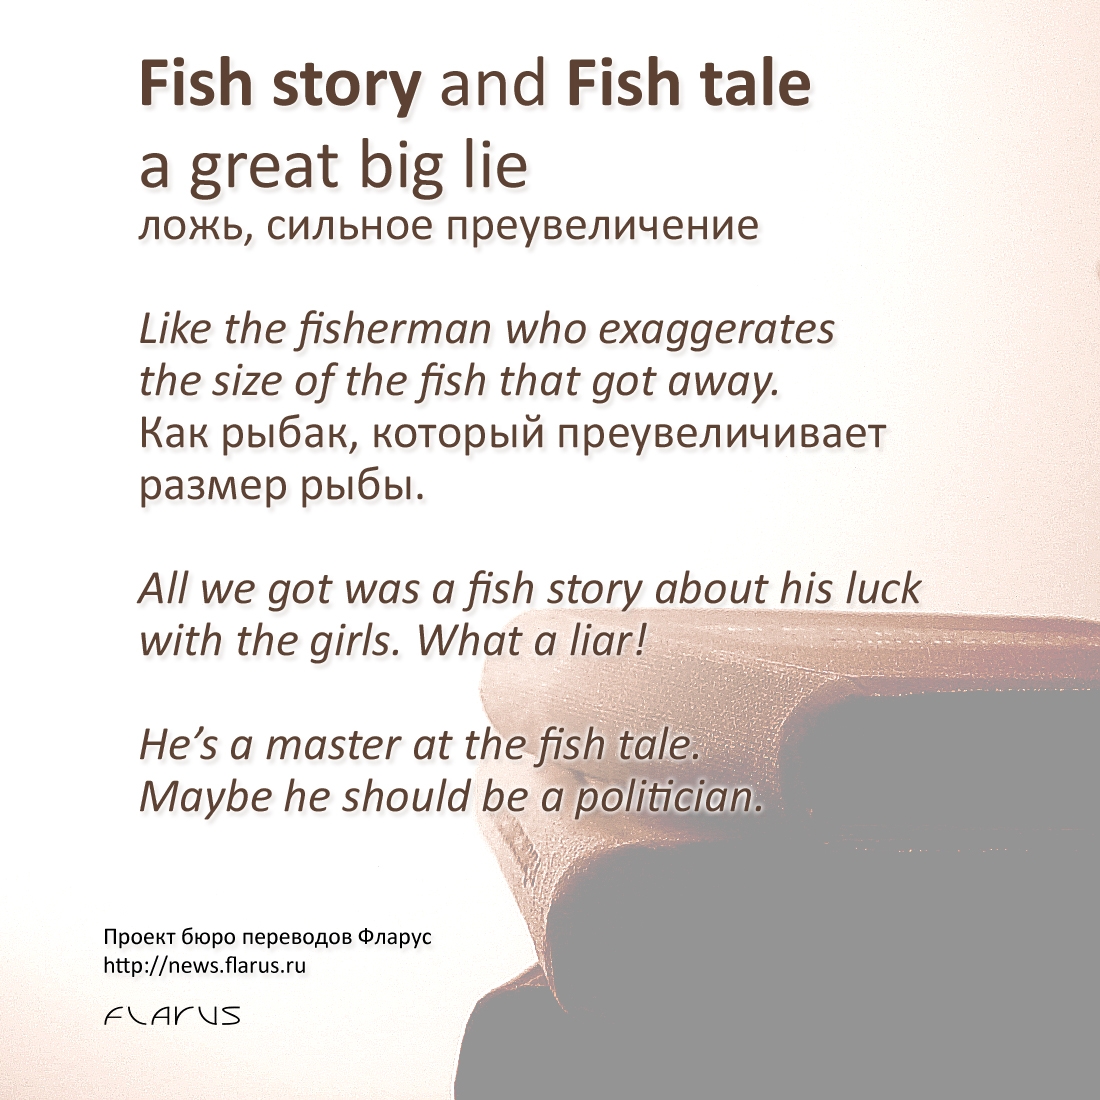 fish story, fish tale, lie